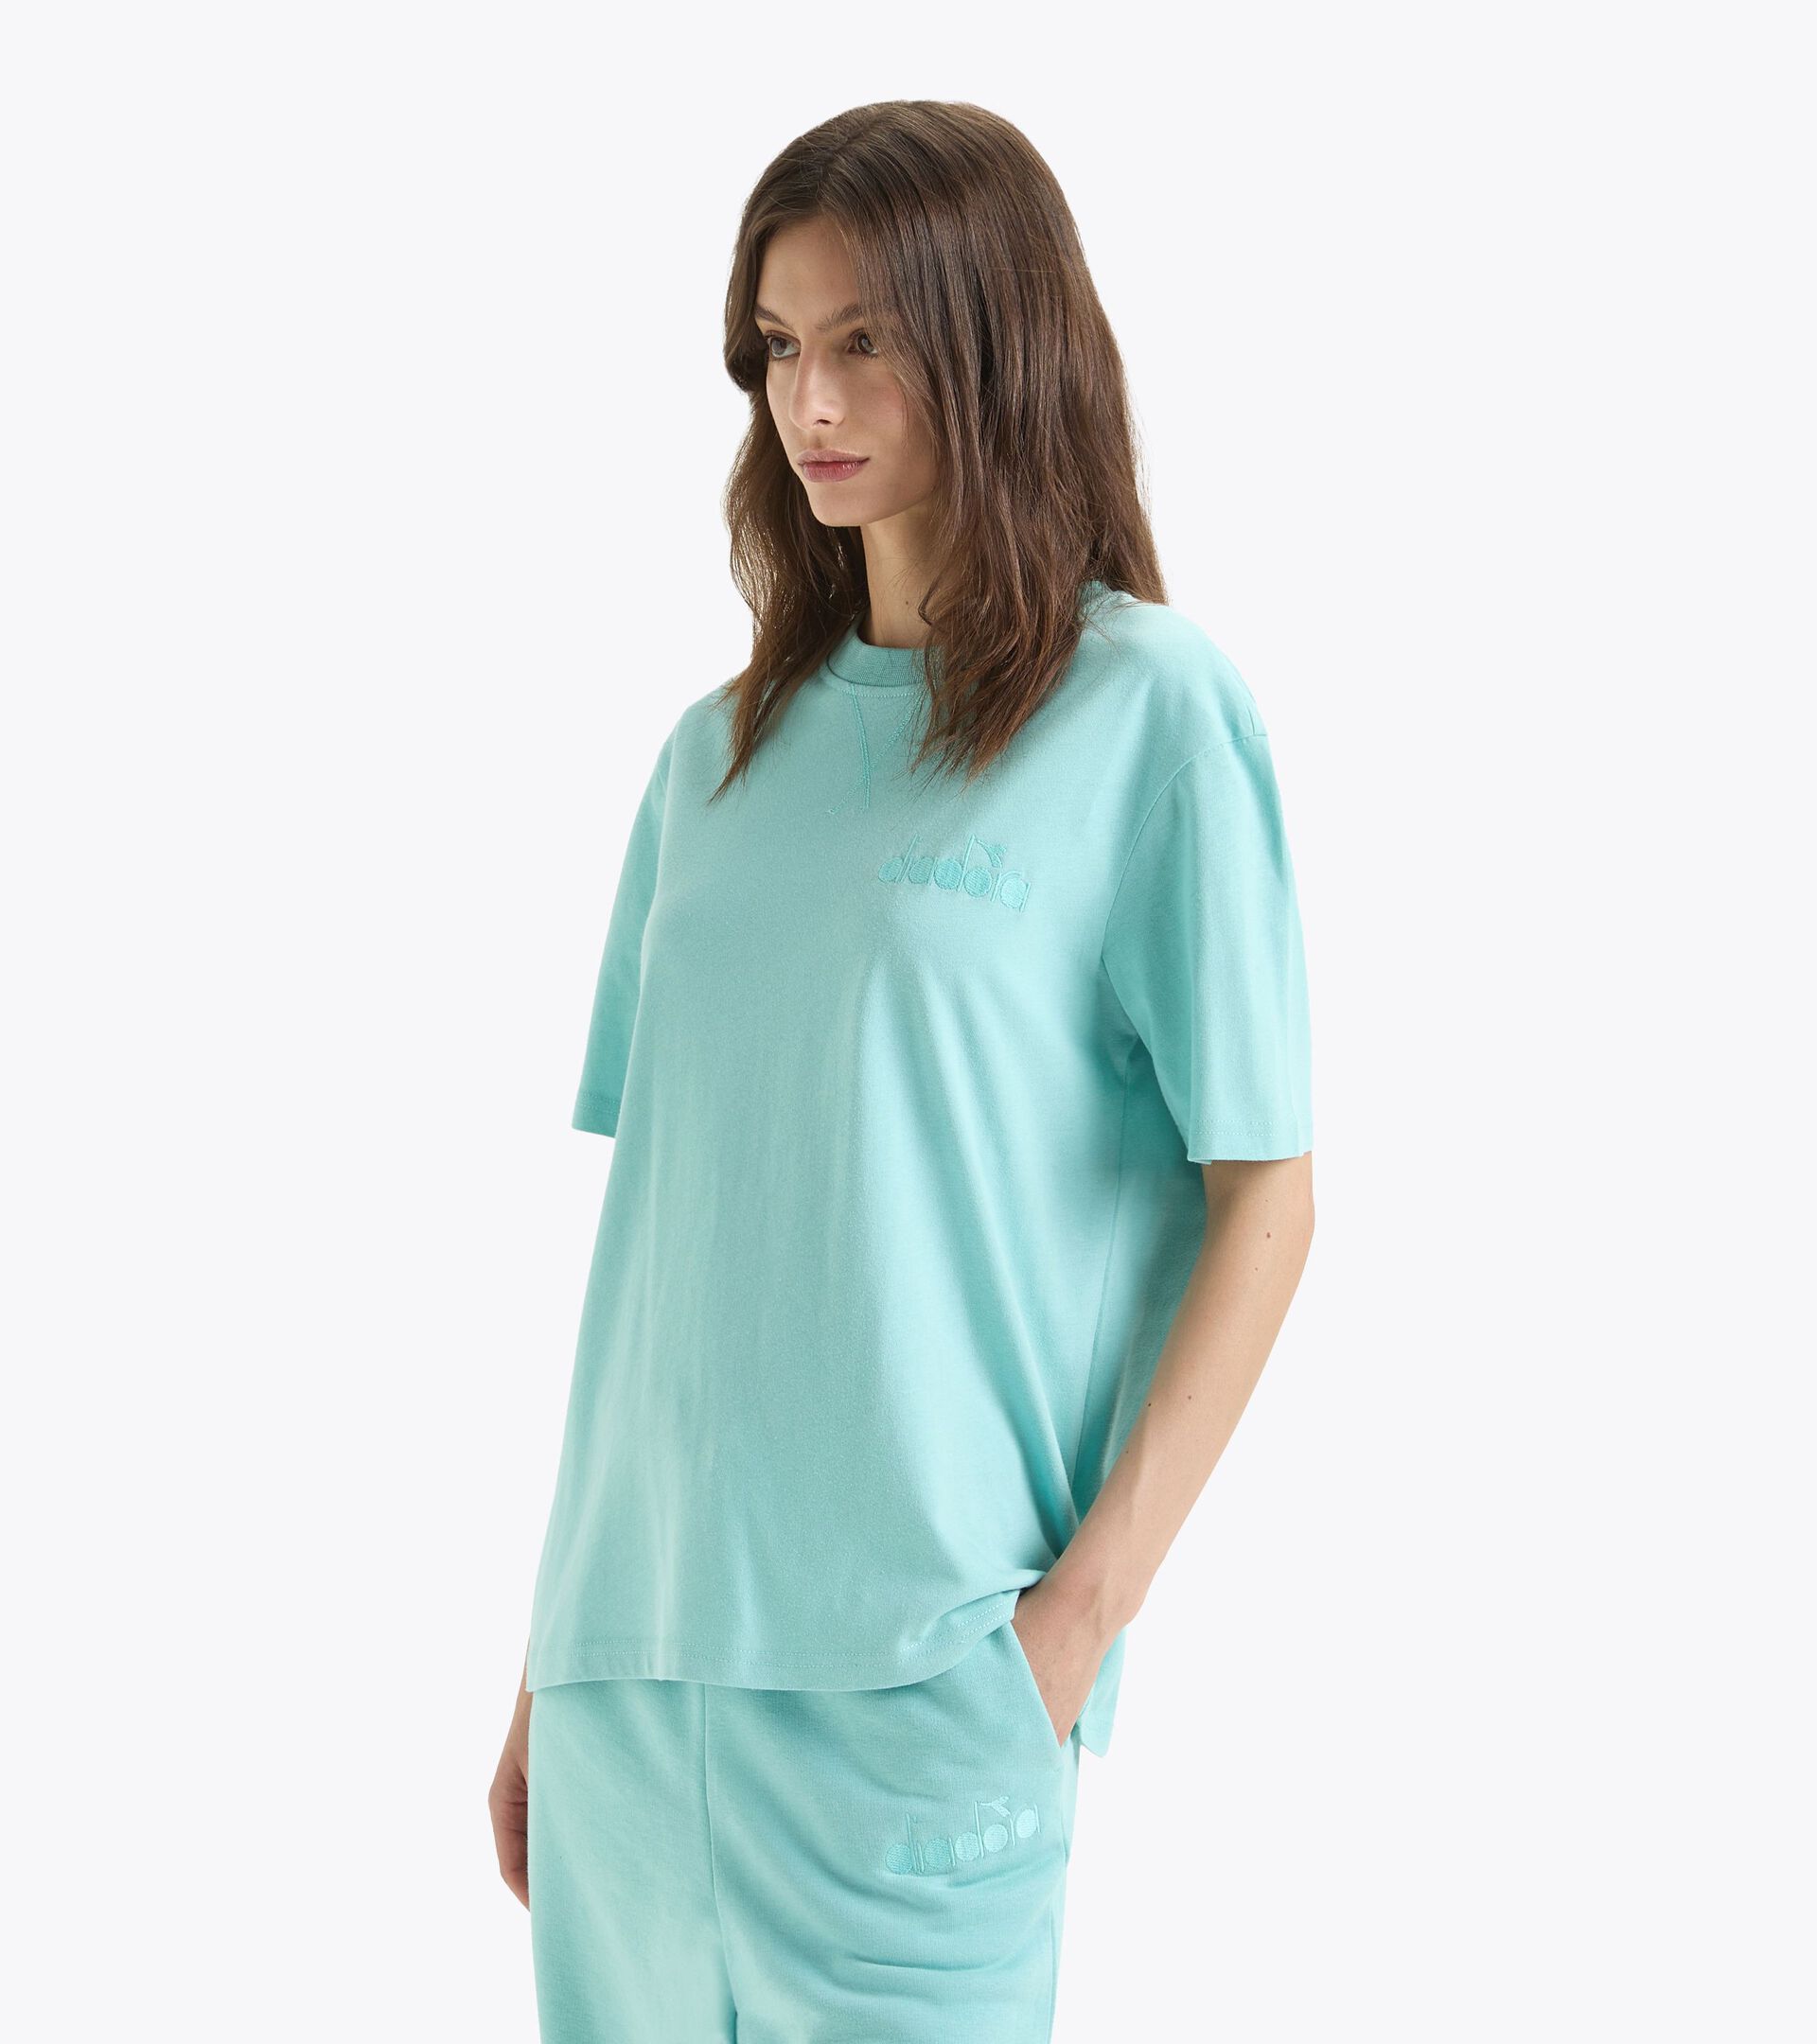 T-shirt - Gender Neutral T-SHIRT SS ATHL. LOGO TURQUOISE   (65135) - Diadora